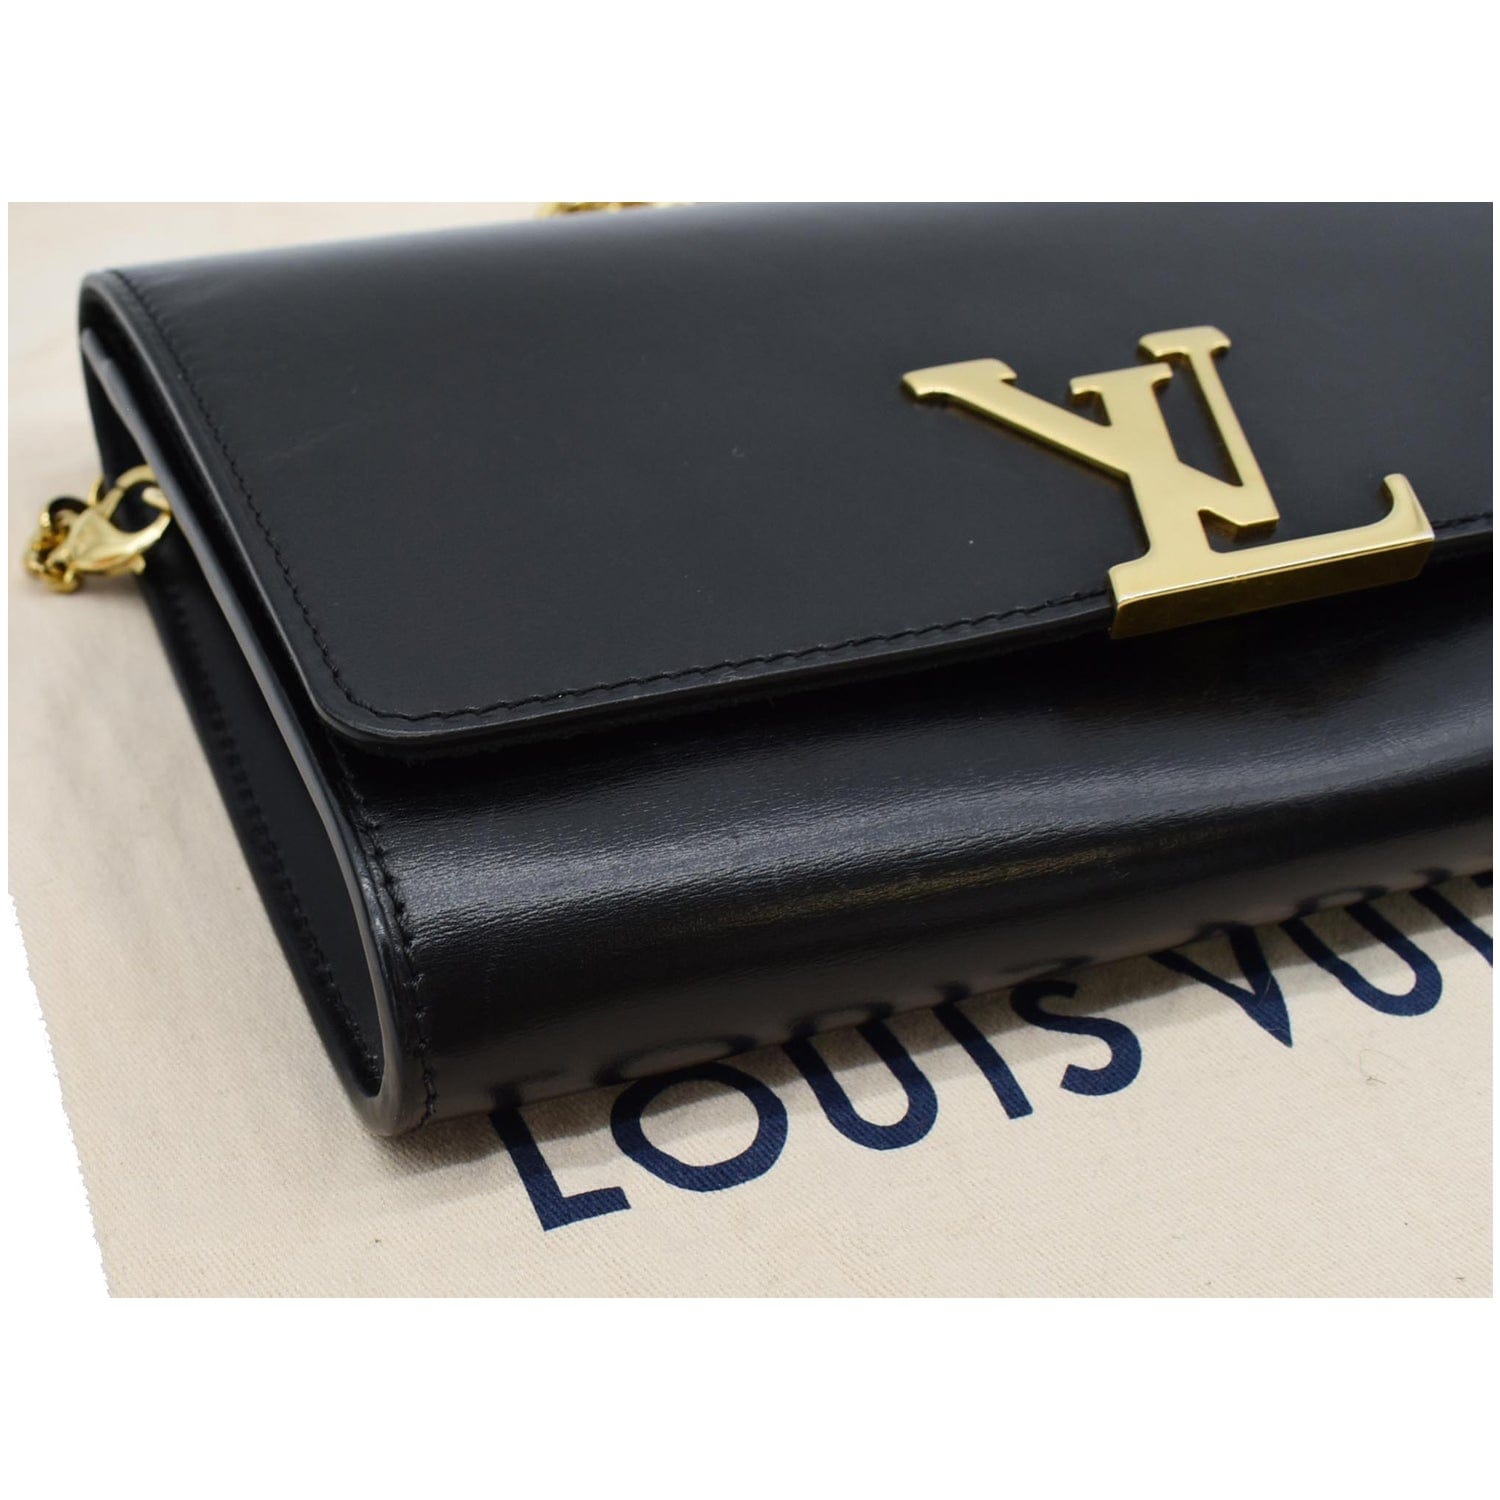 Louis Vuitton Red Calfskin Leather Chain Louise GM Bag